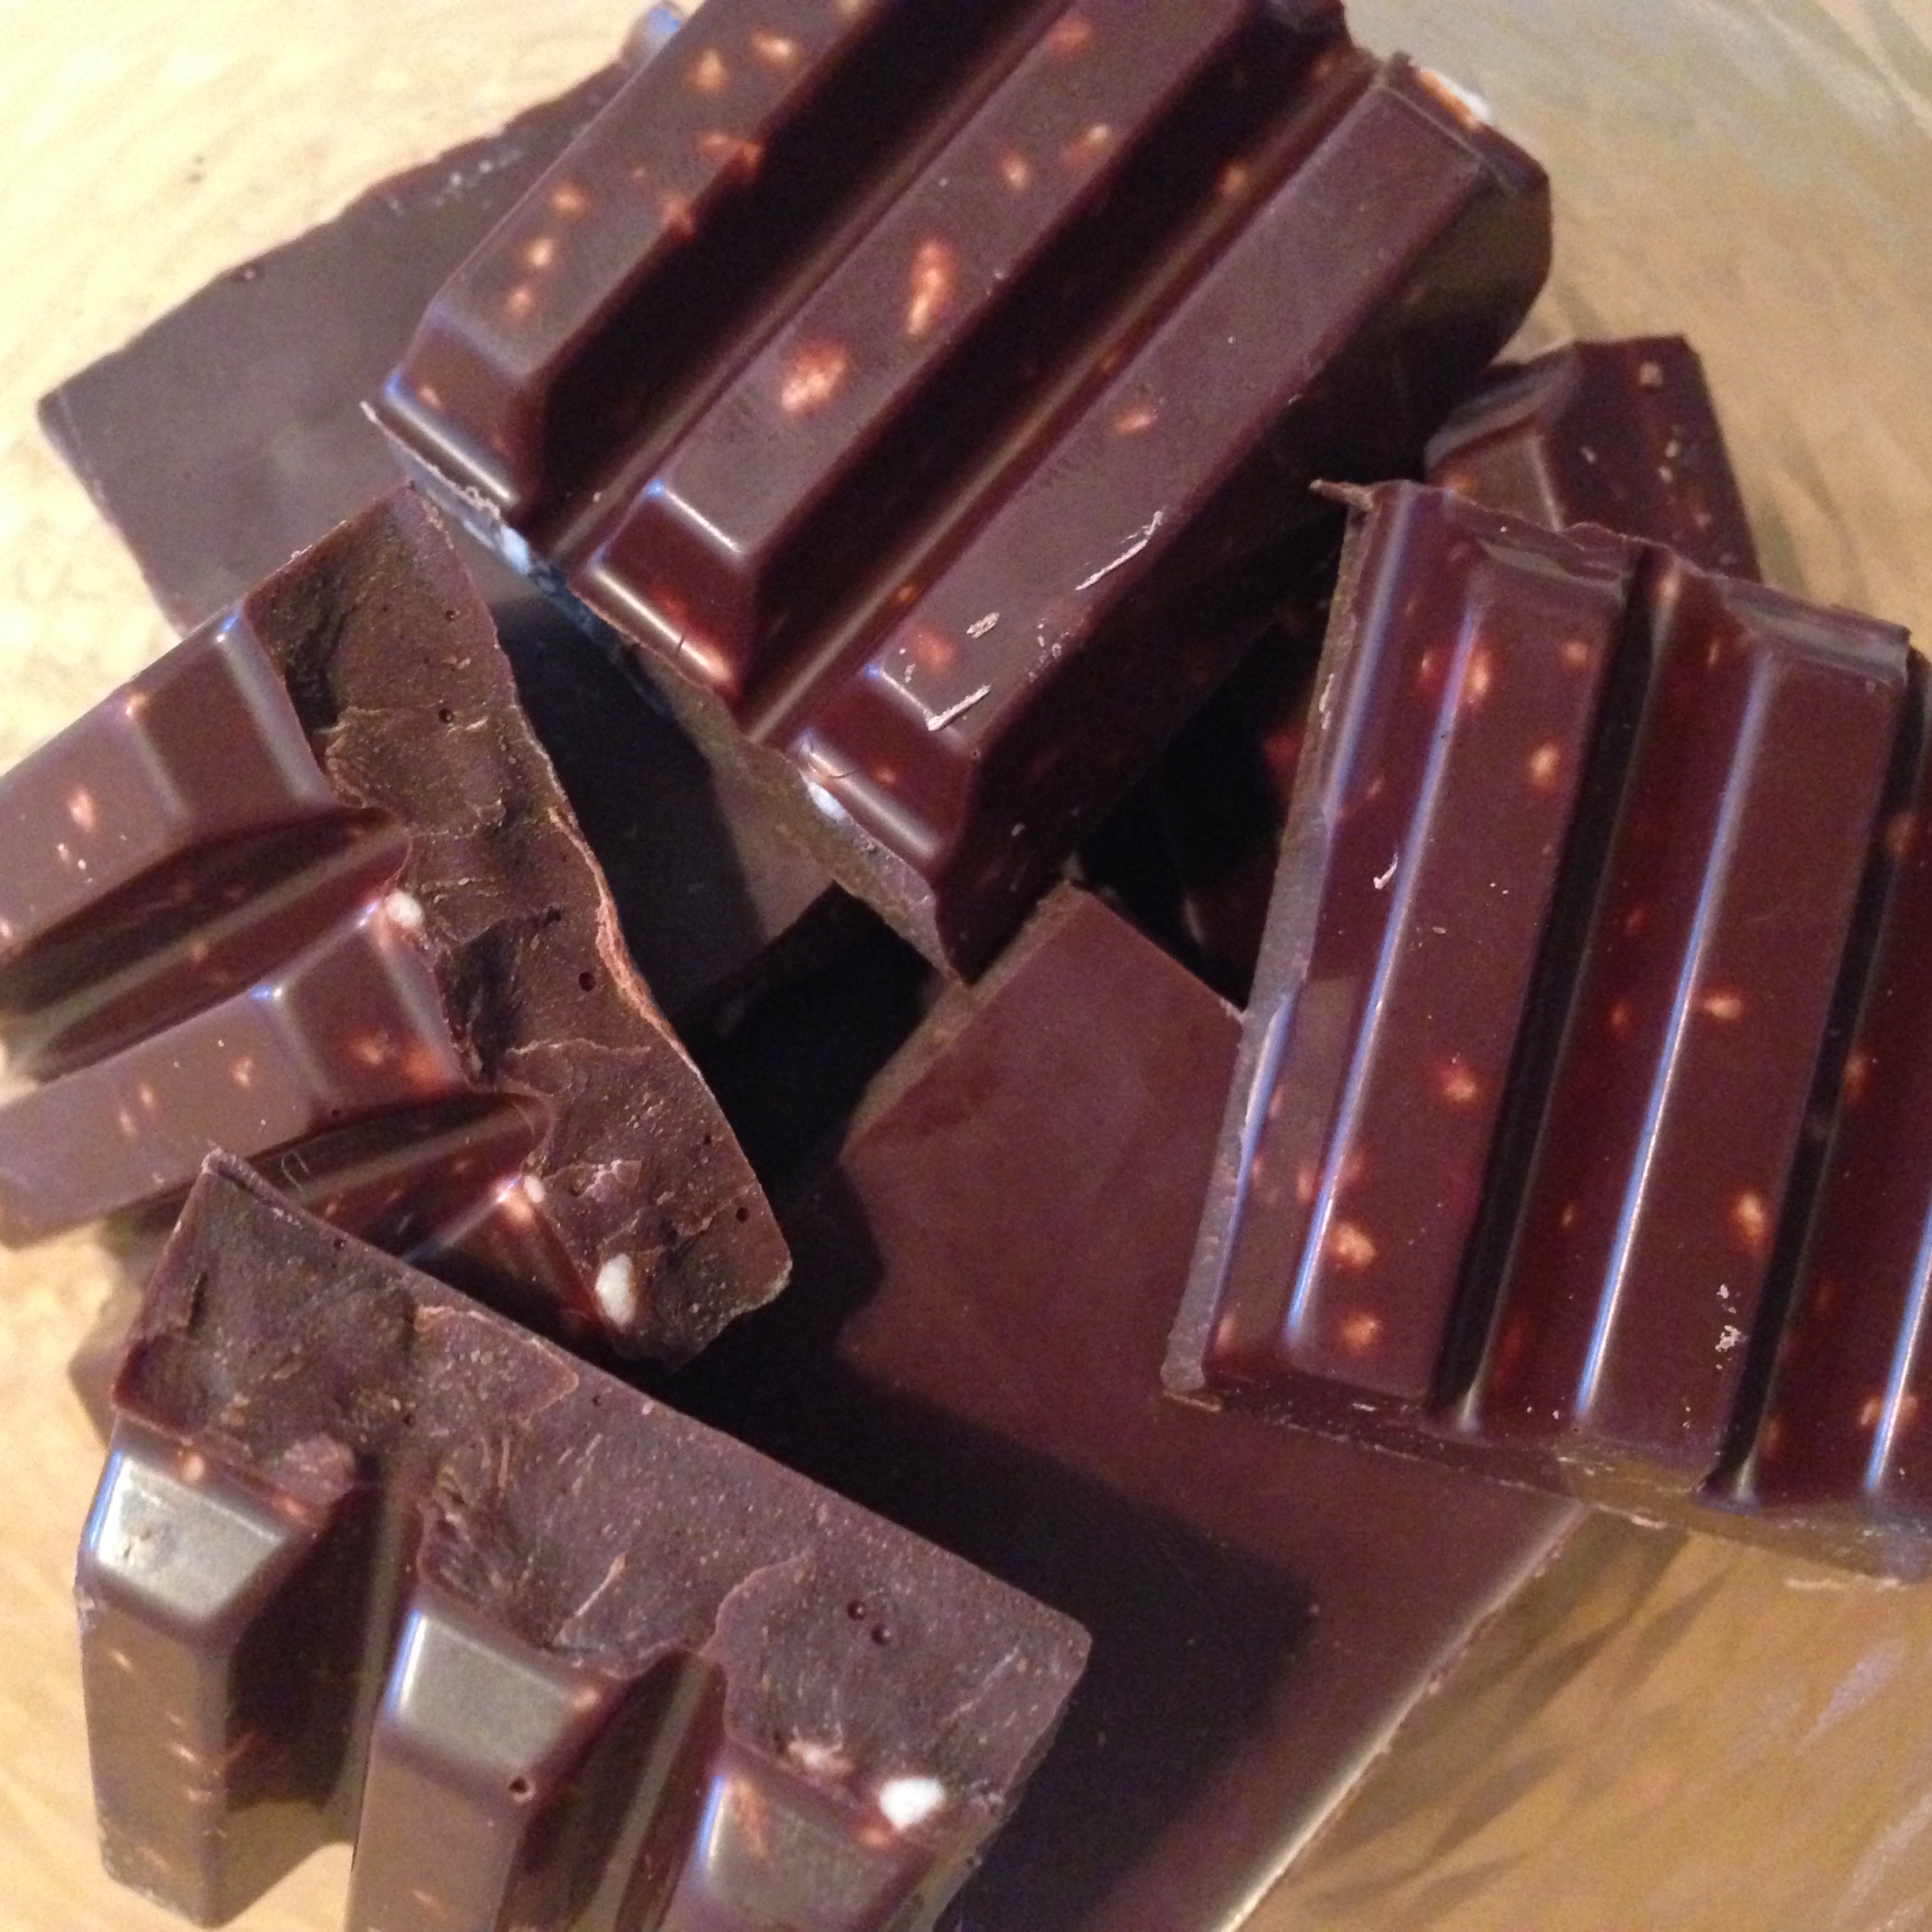 ordbog Paine Gillic Thicken Glutenfri chokolade - en guide - Glutenfrimagi